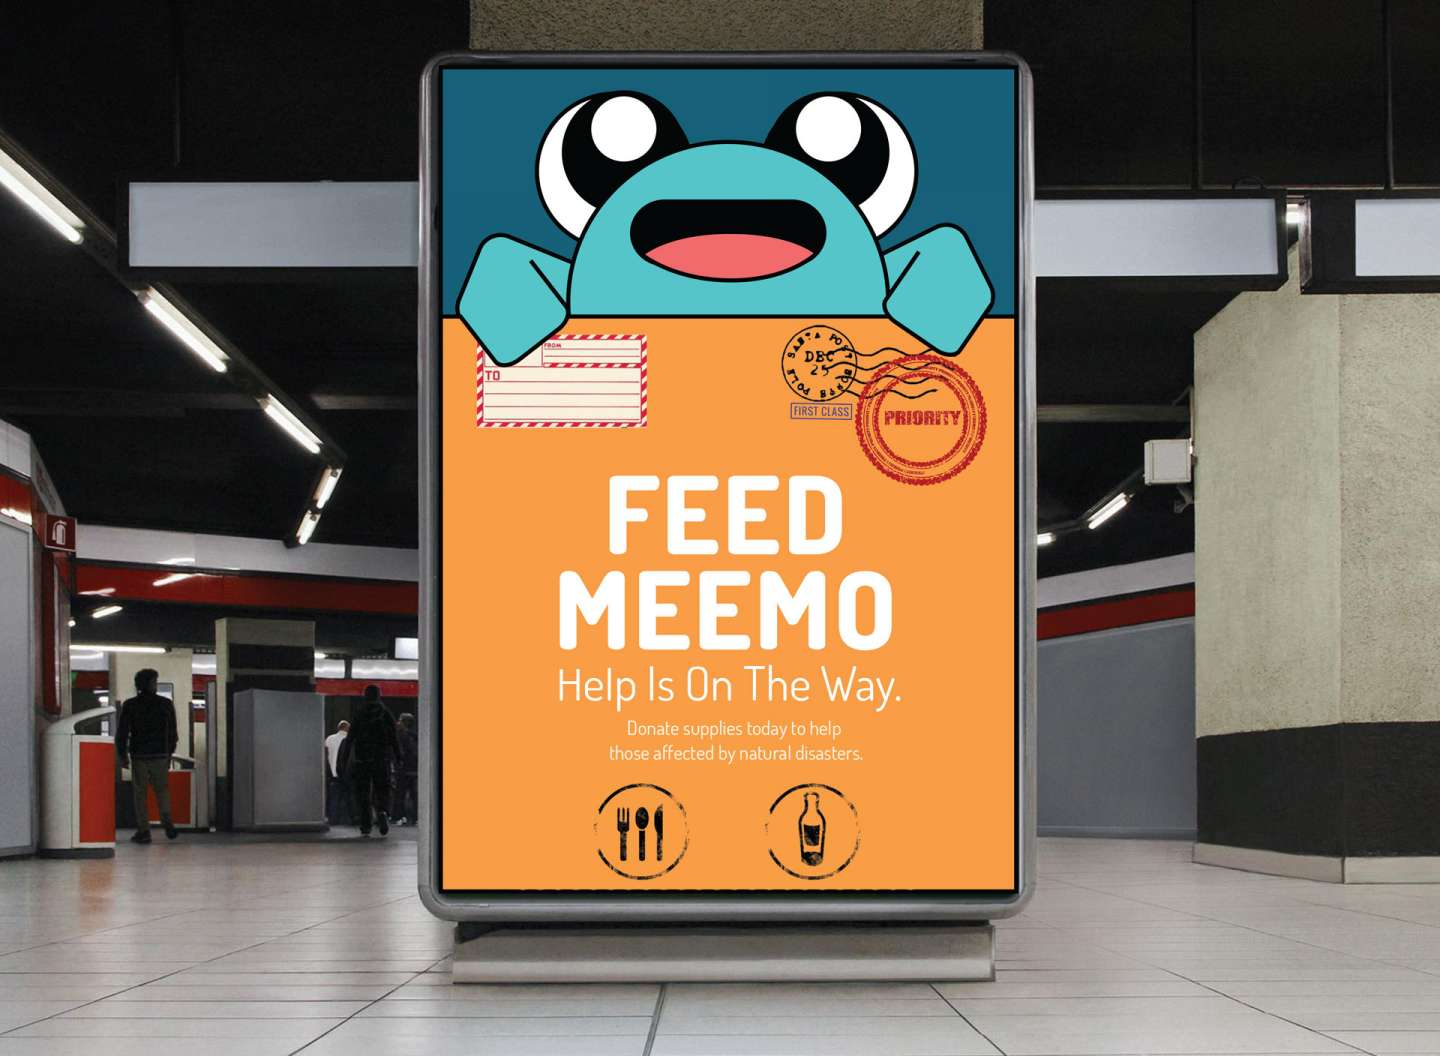 FEED MEEMO